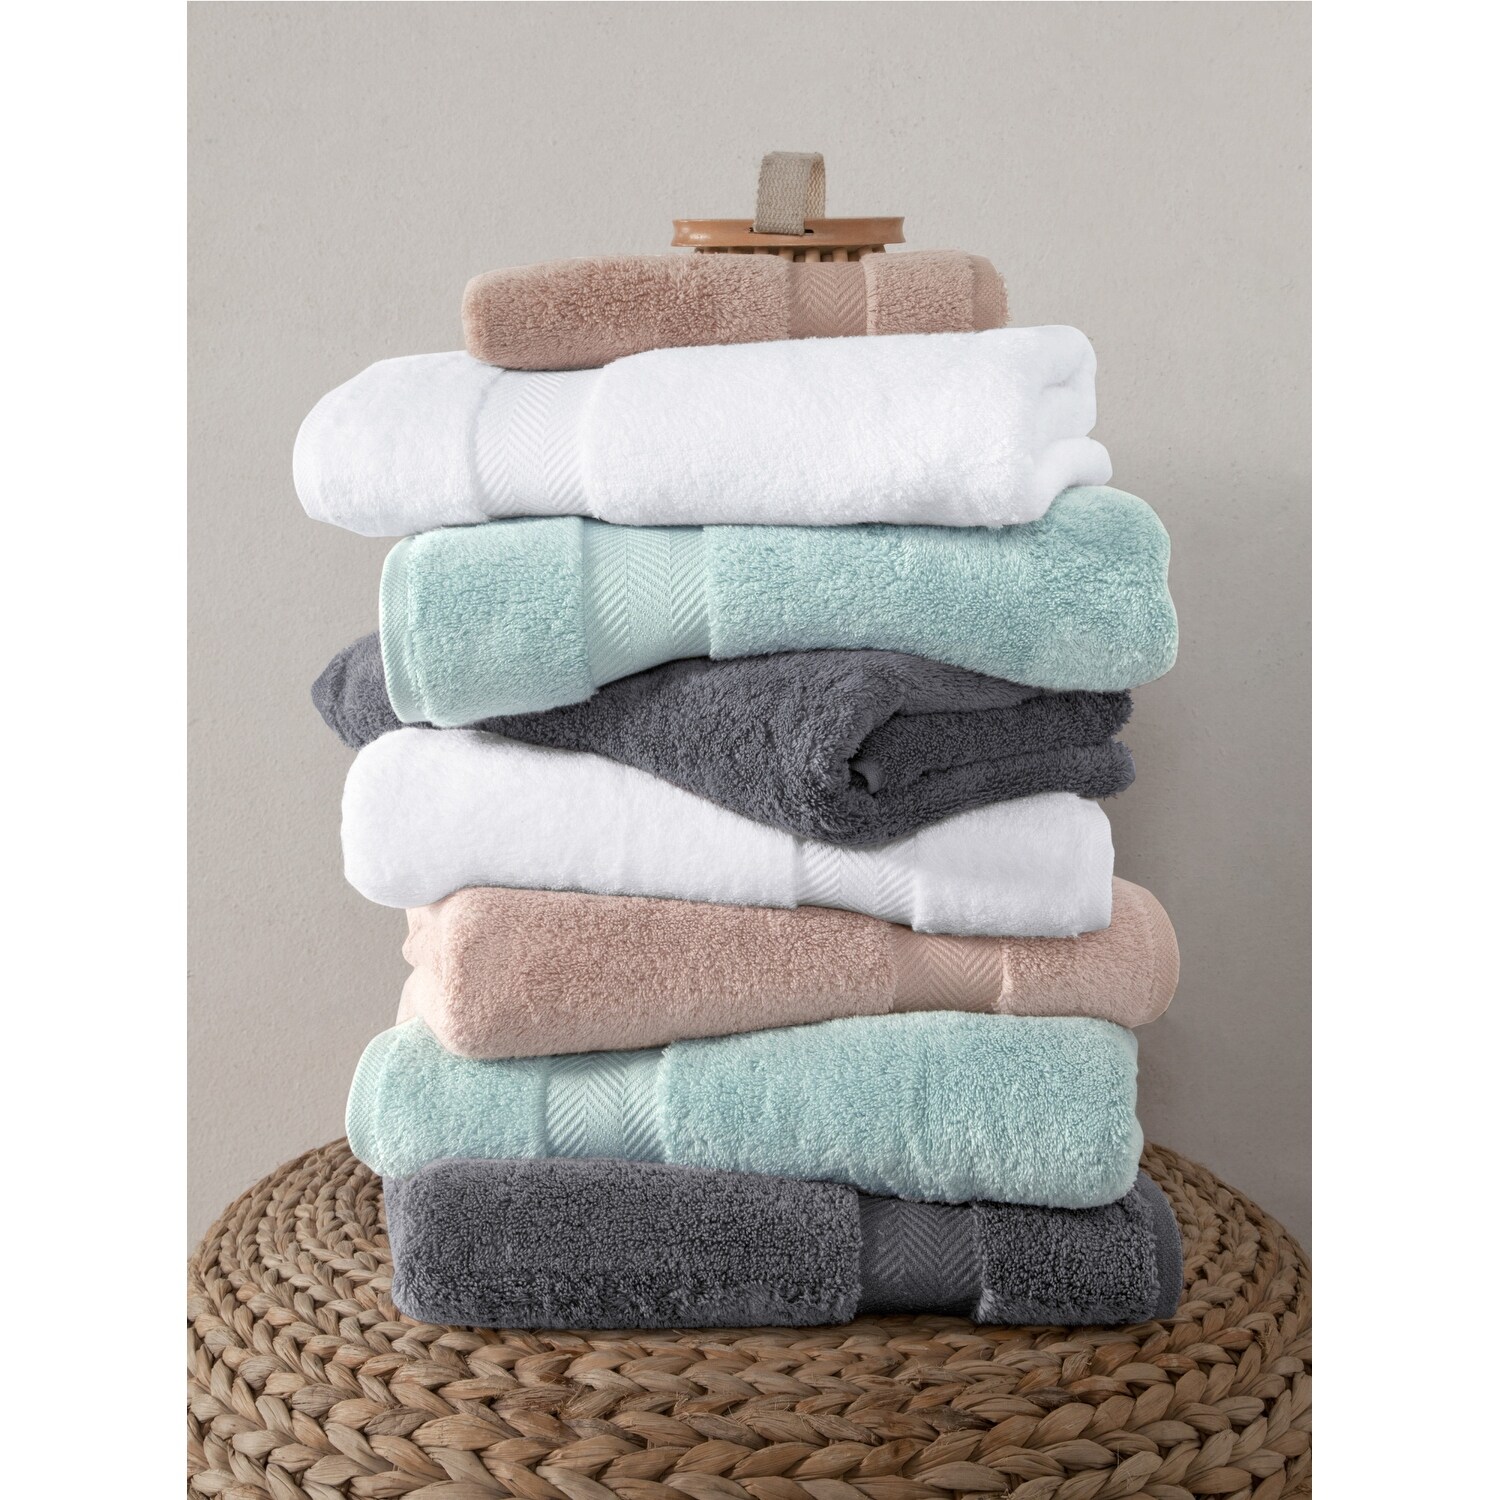 https://ak1.ostkcdn.com/images/products/is/images/direct/fd93f19f956758d1c7ad38434916e37789c5354f/Towels-Beyond-Turkish-Cotton%2C-Set-of-6-Bath-%26-Hand-Towels%2C-Washcloths.jpg